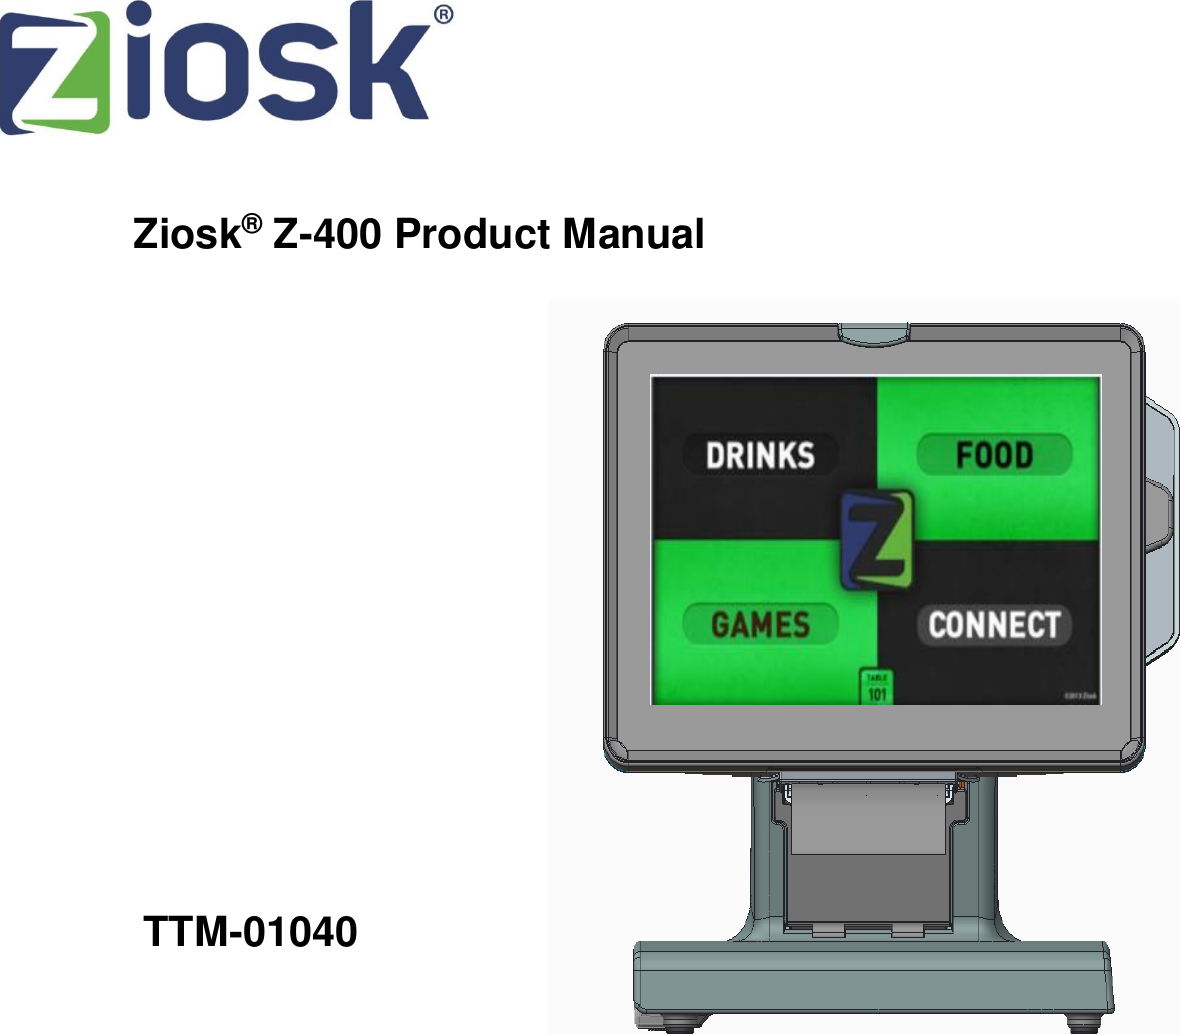      Ziosk® Z-400 Product Manual                                          TTM-01040   